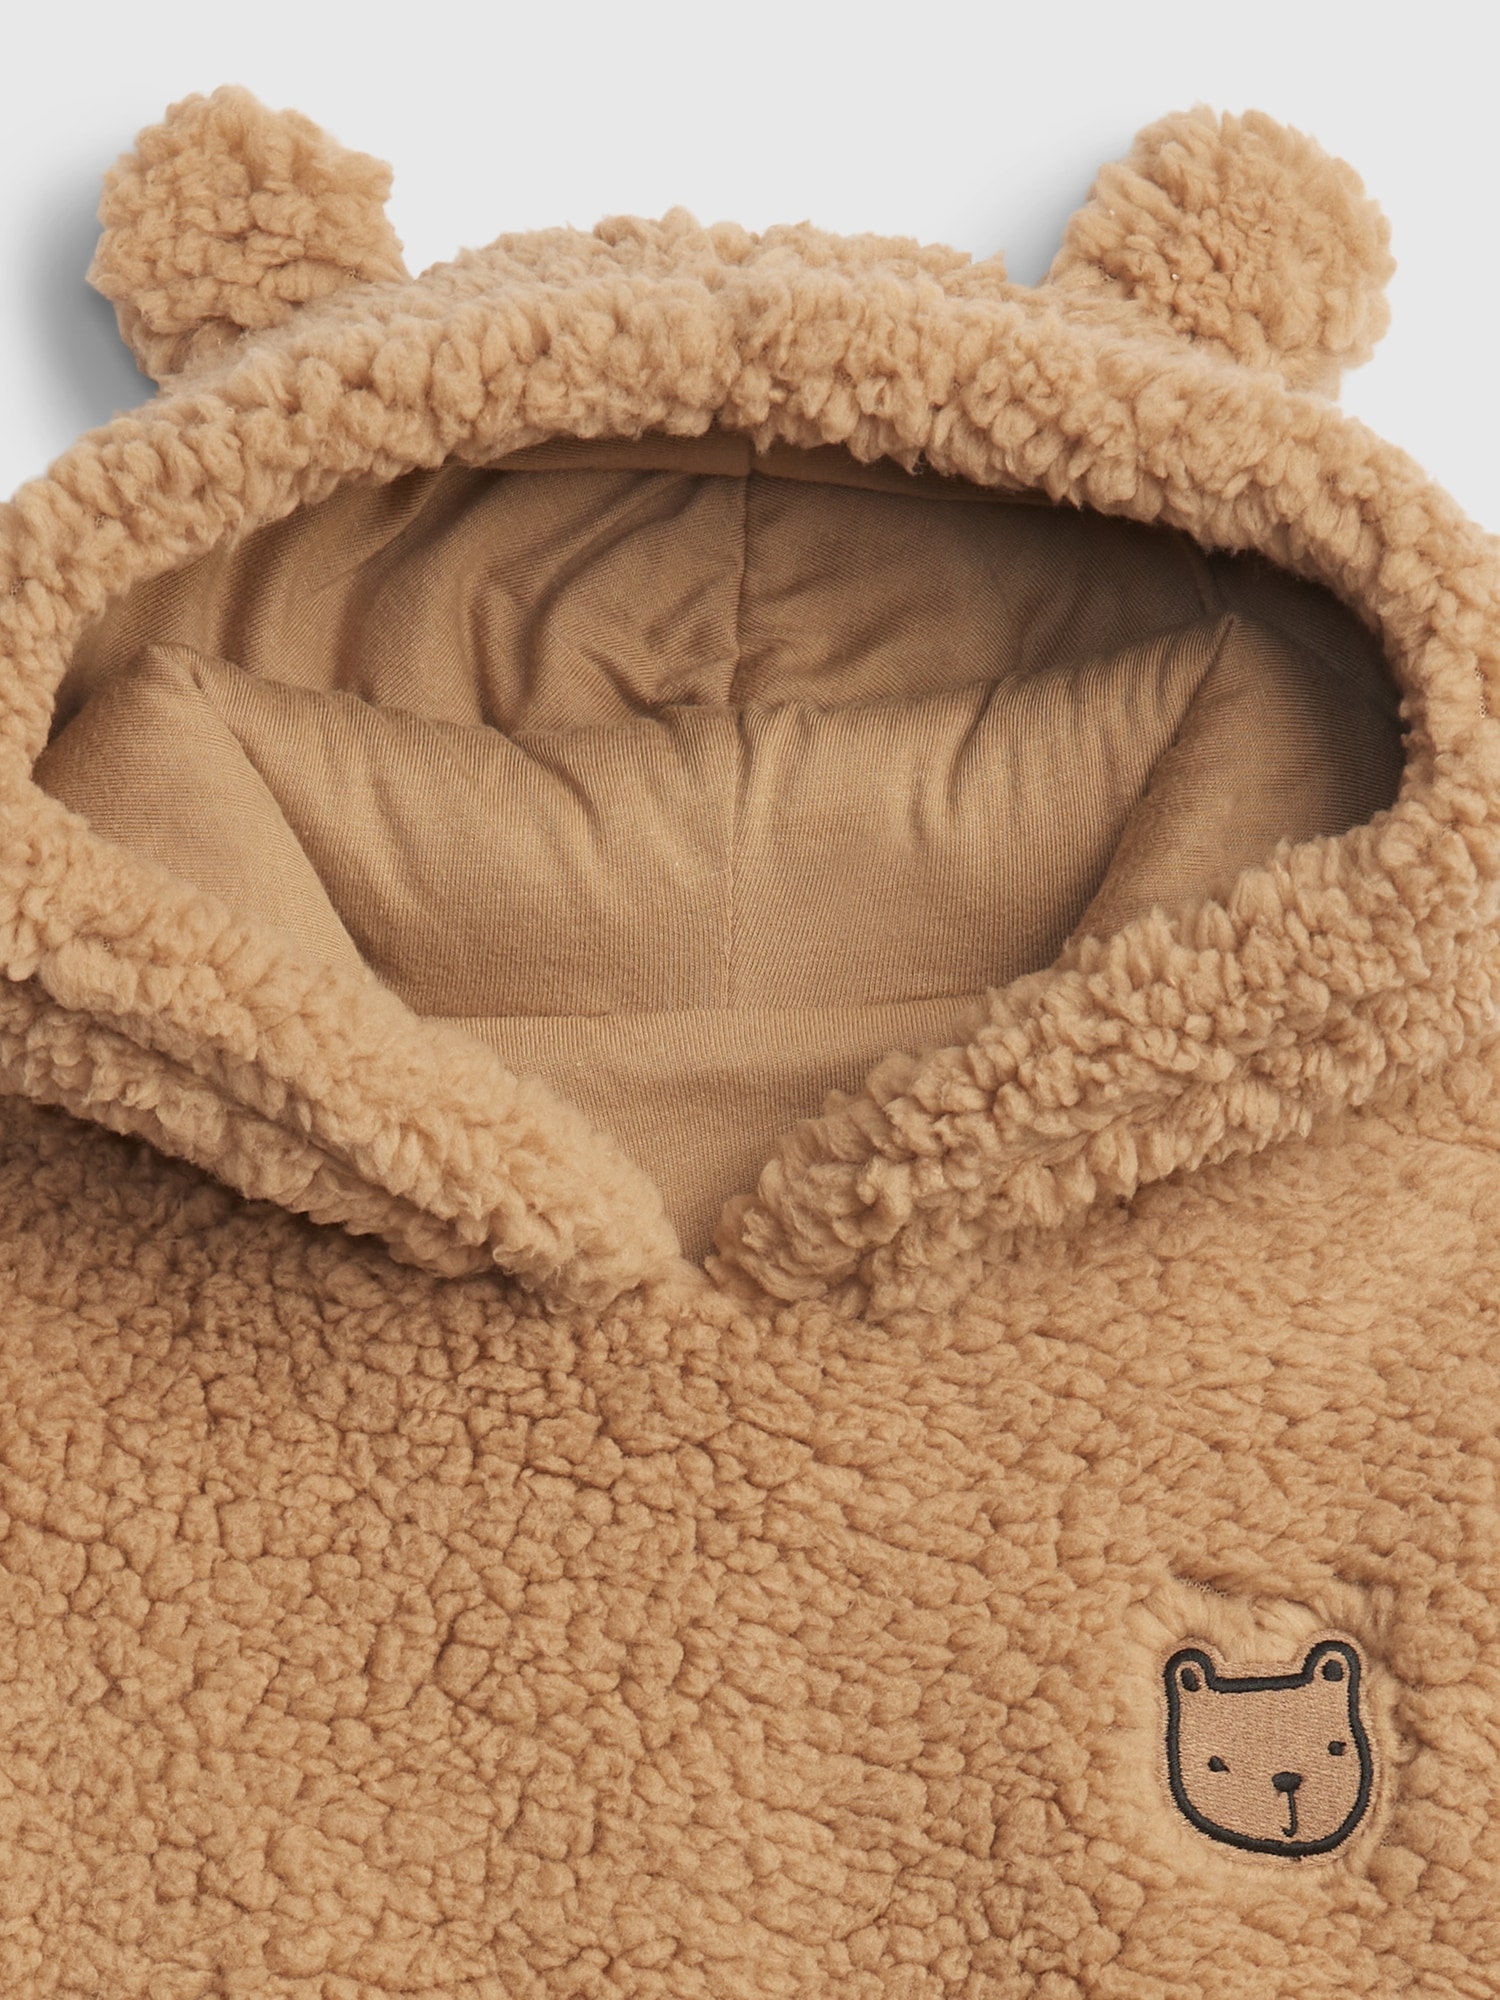 Gap Toddler Brannan Bear Sweater